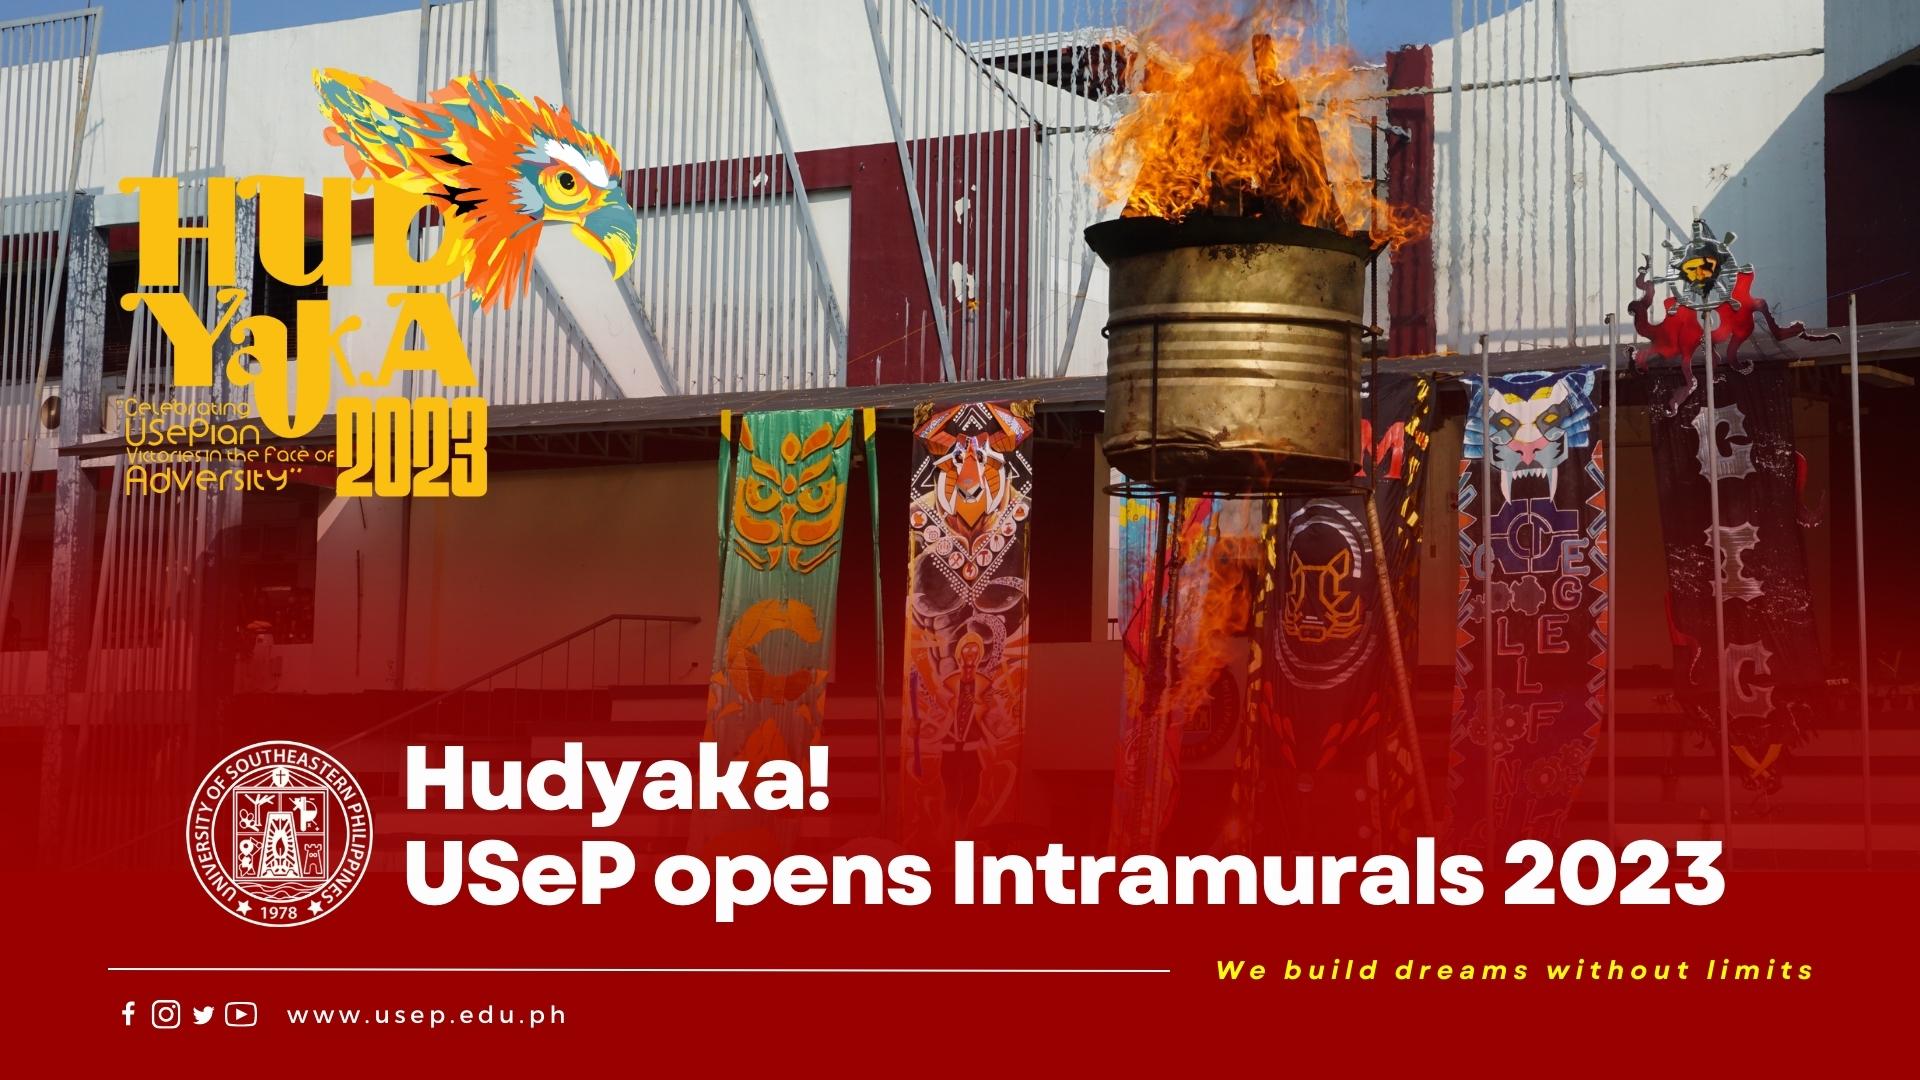 Hudyaka! USeP opens Intramurals 2023